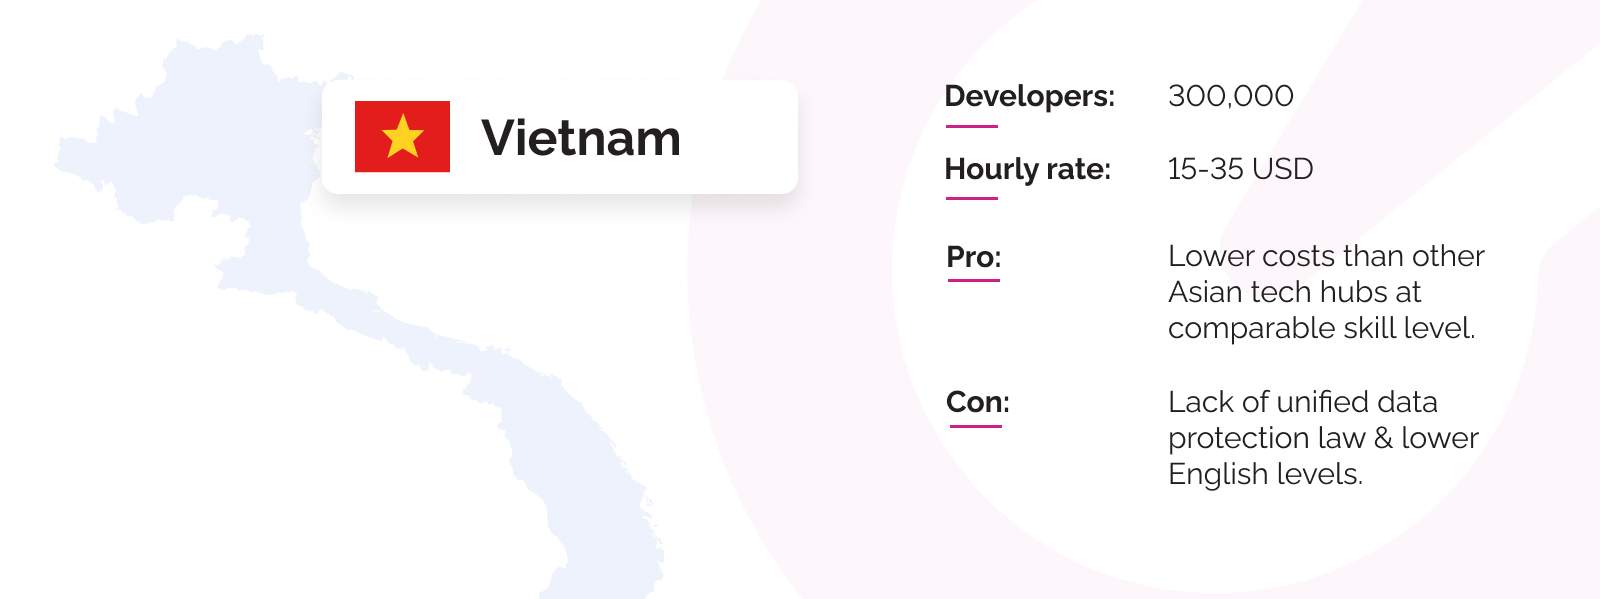 Software development outsourcing statistics for Vietnam.